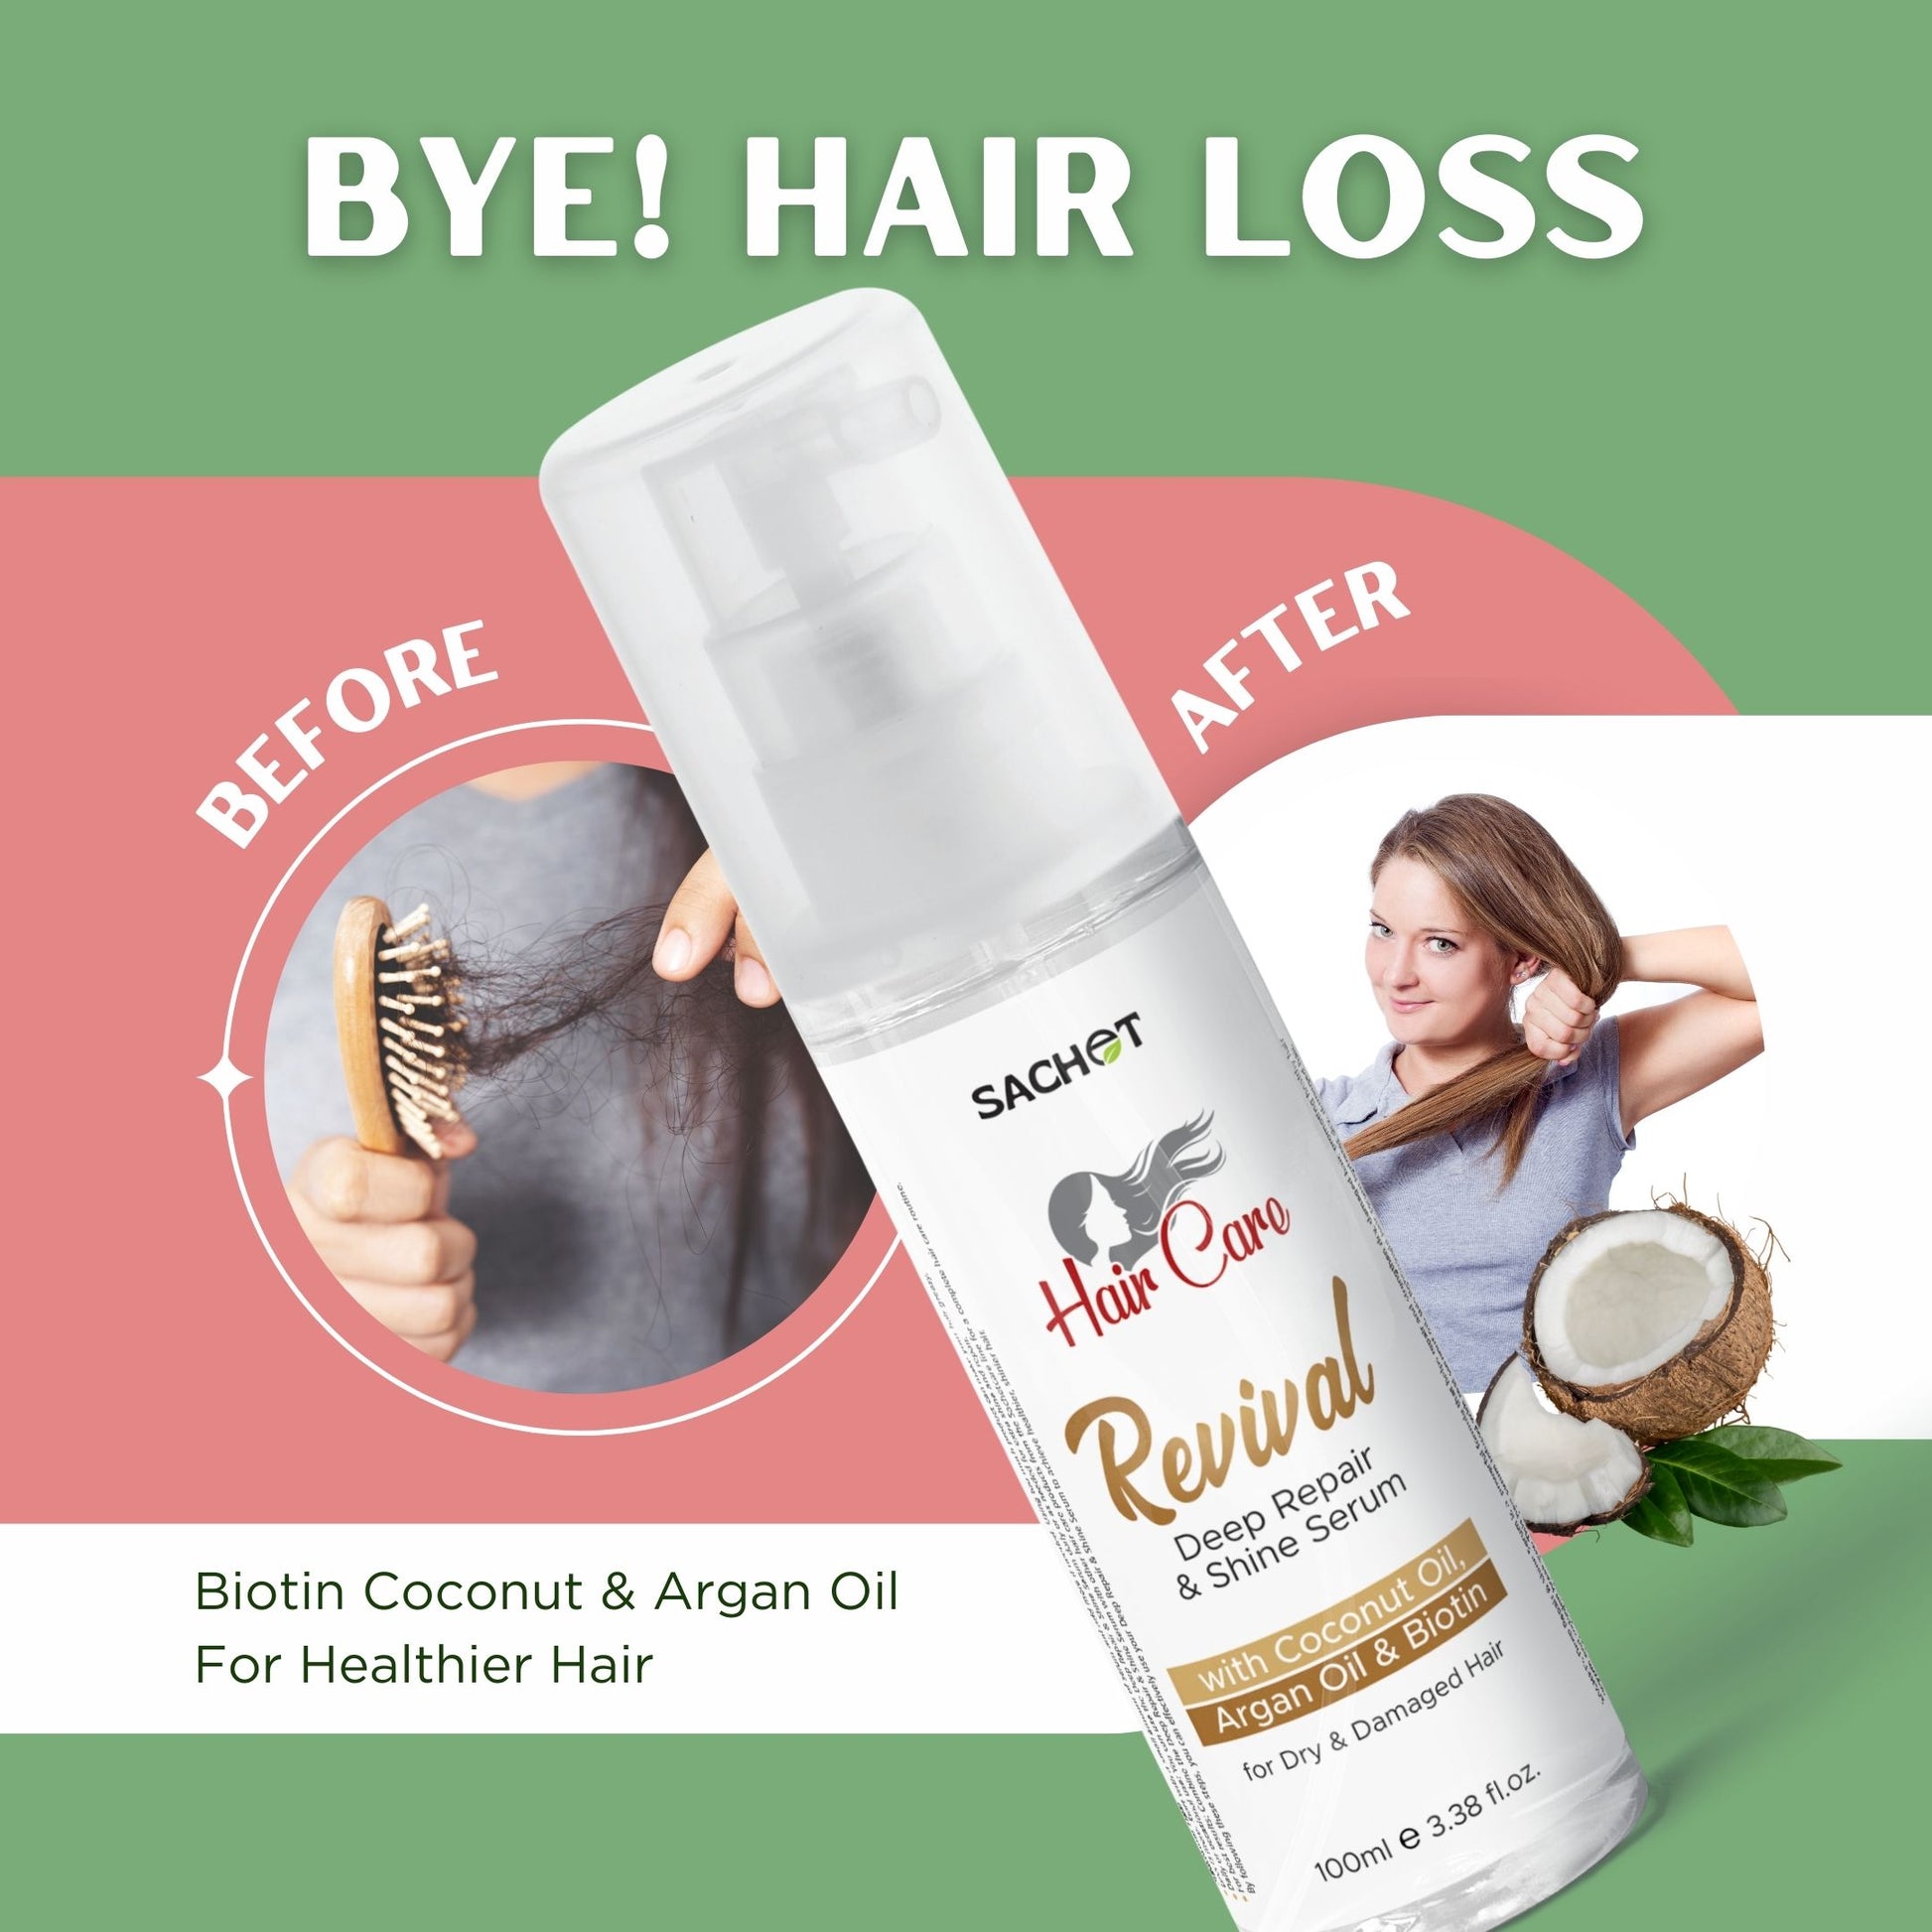 Revival Hair Serum: Breathe New Life into Dry, Damaged Hair (100ml) | sachetcare.com